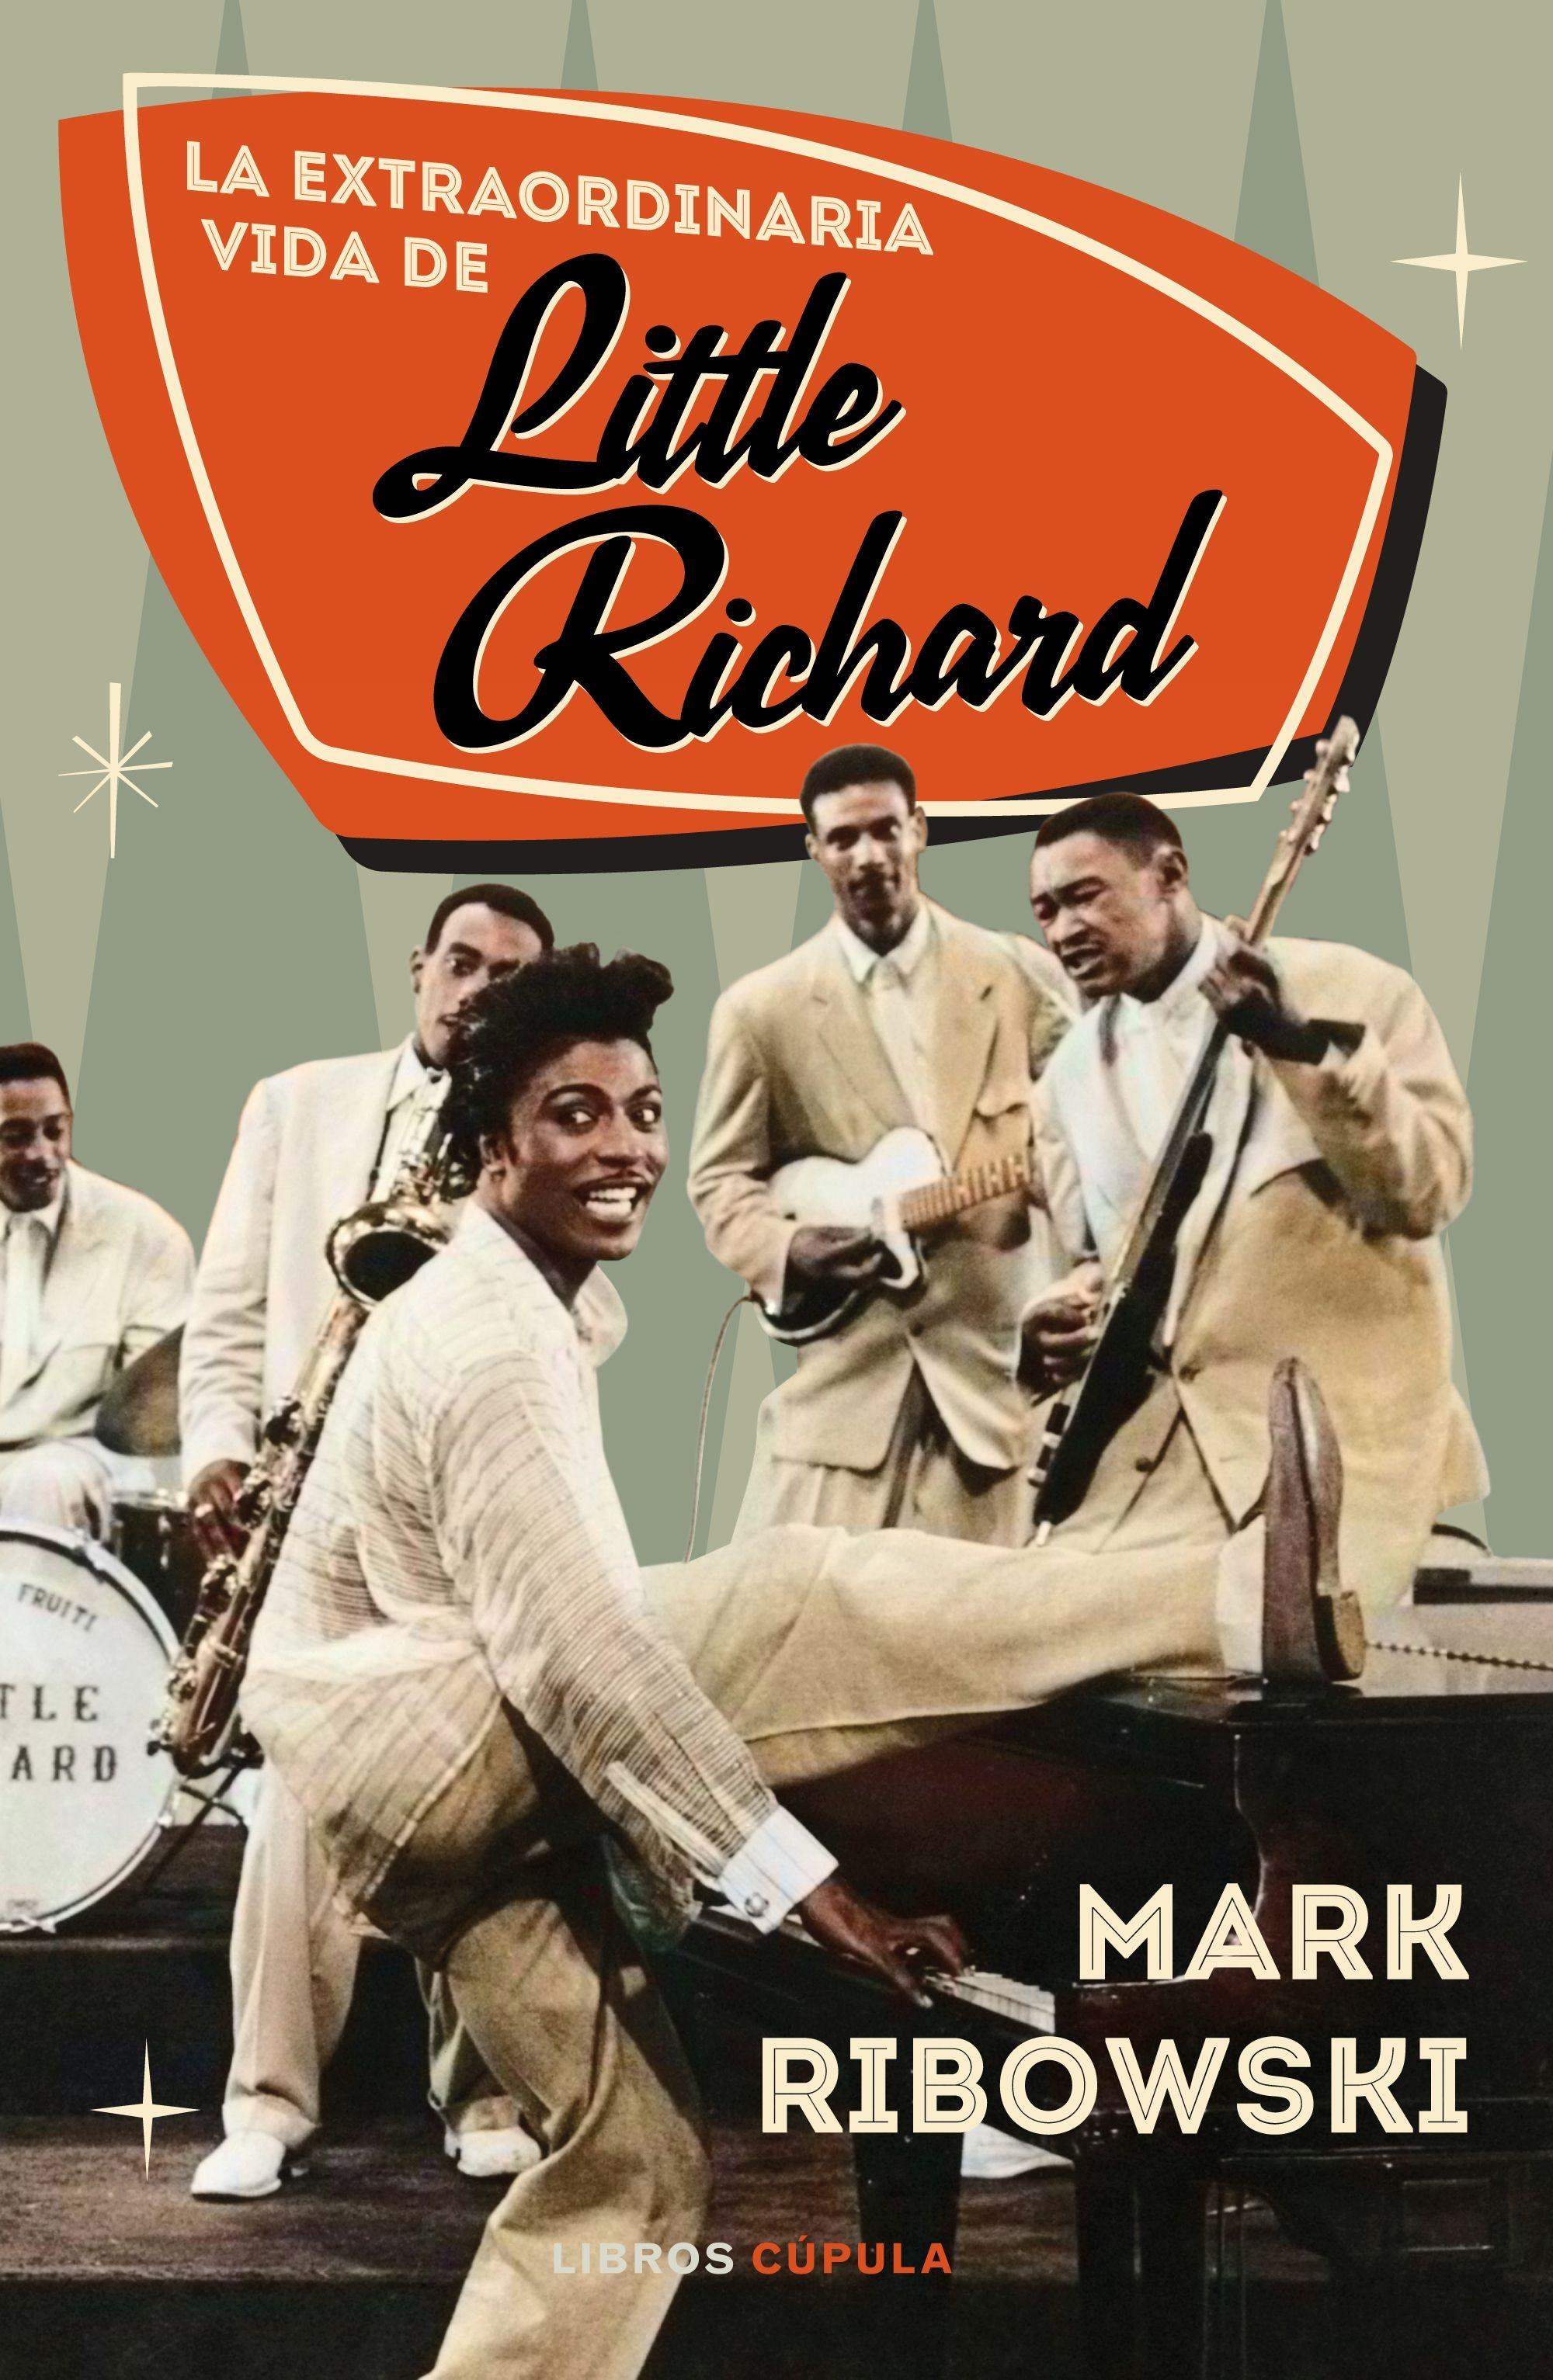 La Extraordinaria Vida de Little Richard